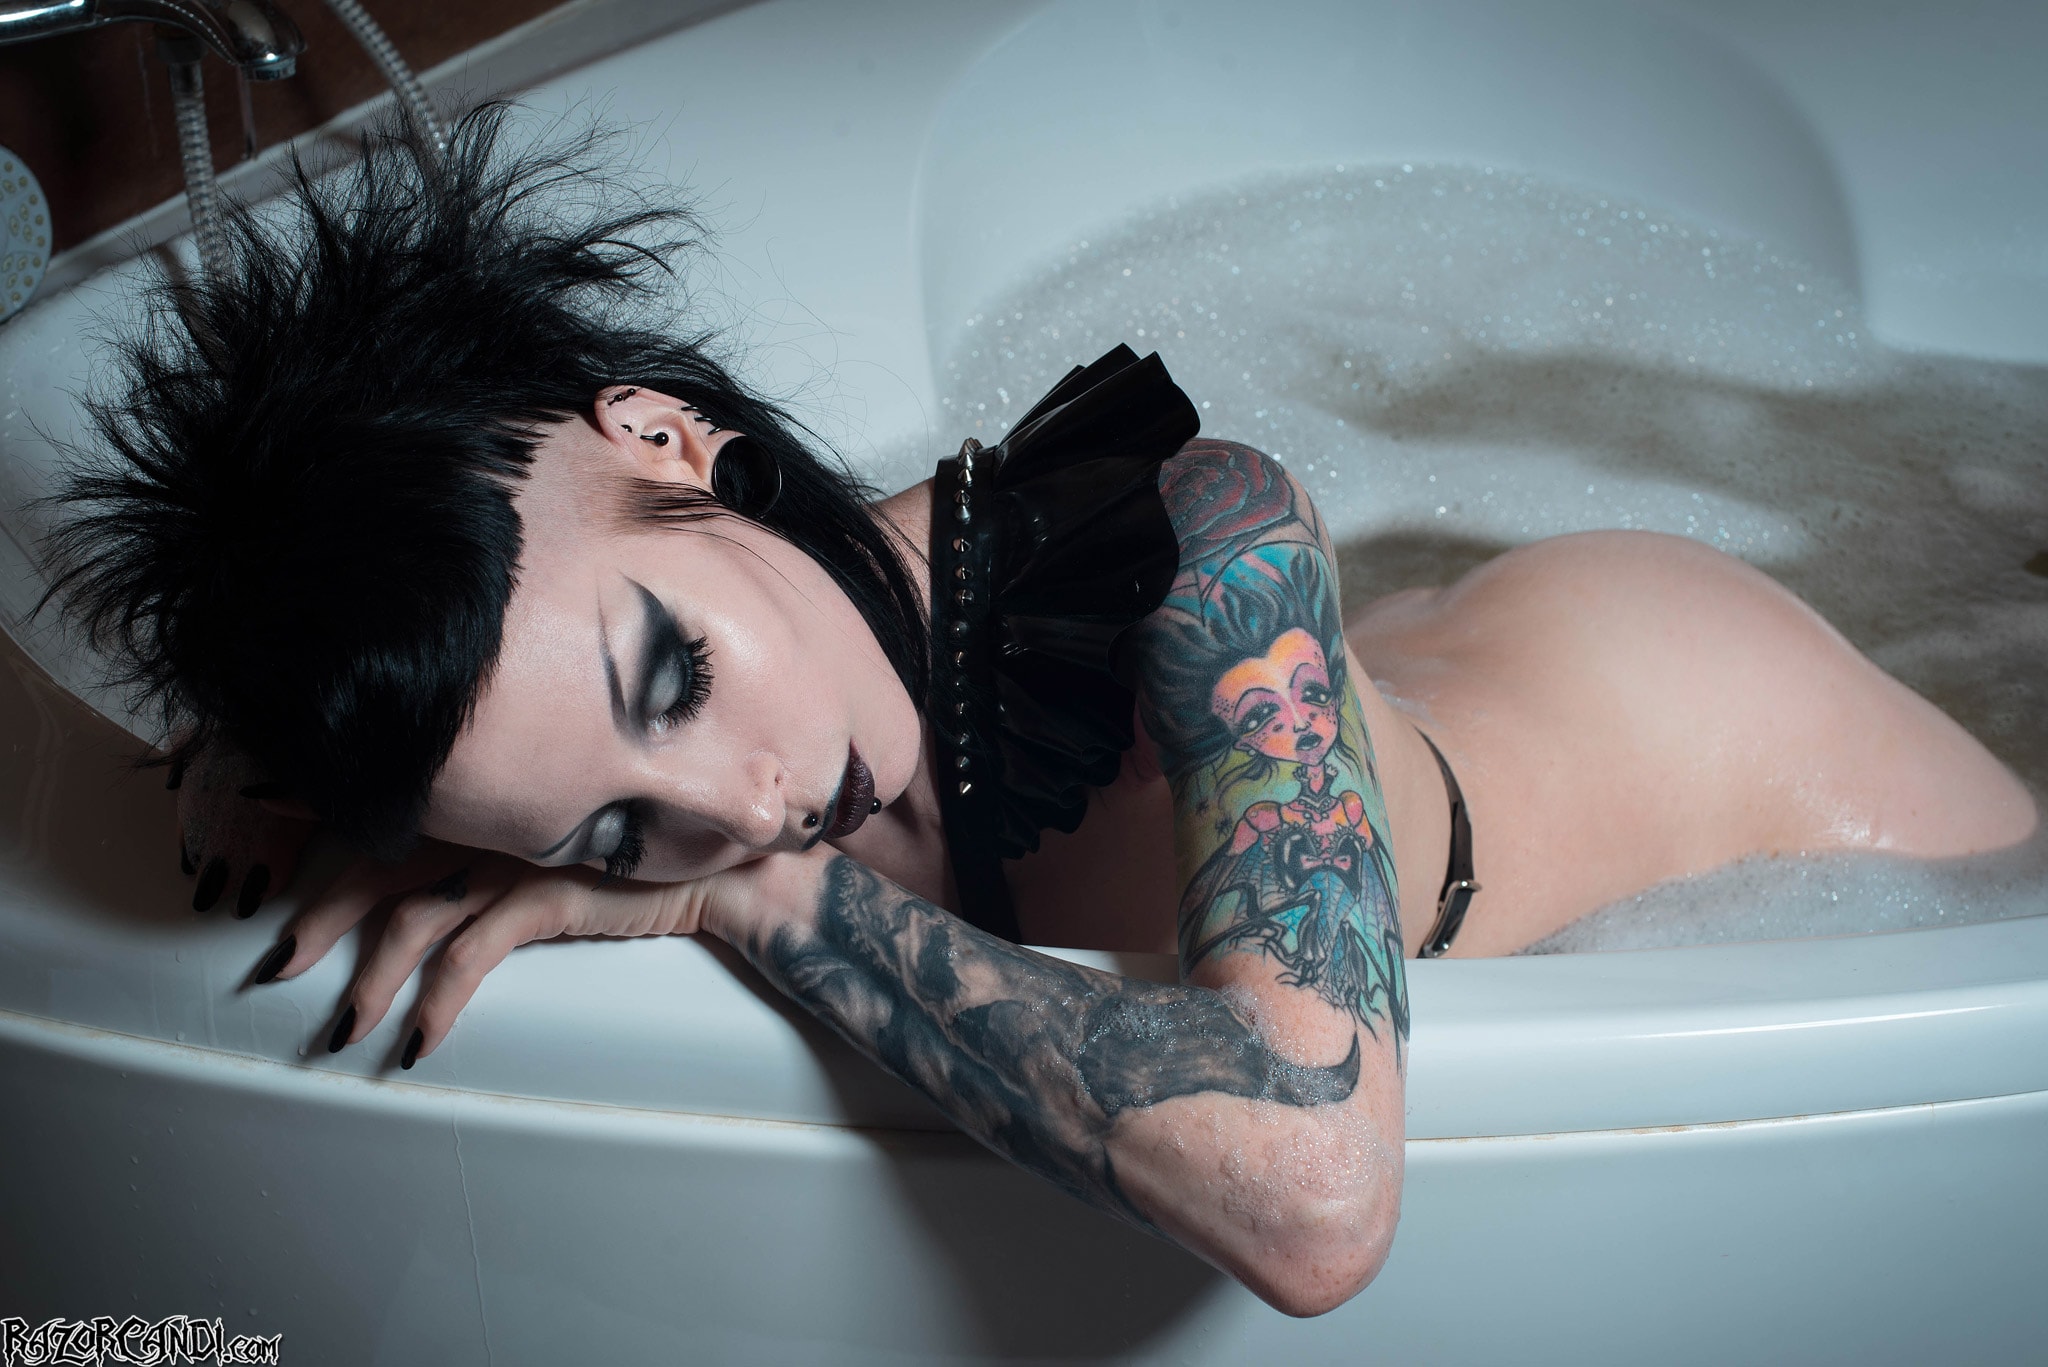 Razor Candi - Busty Wet Fetishy Gothic Babe Bubble Bath Time | Picture (12)